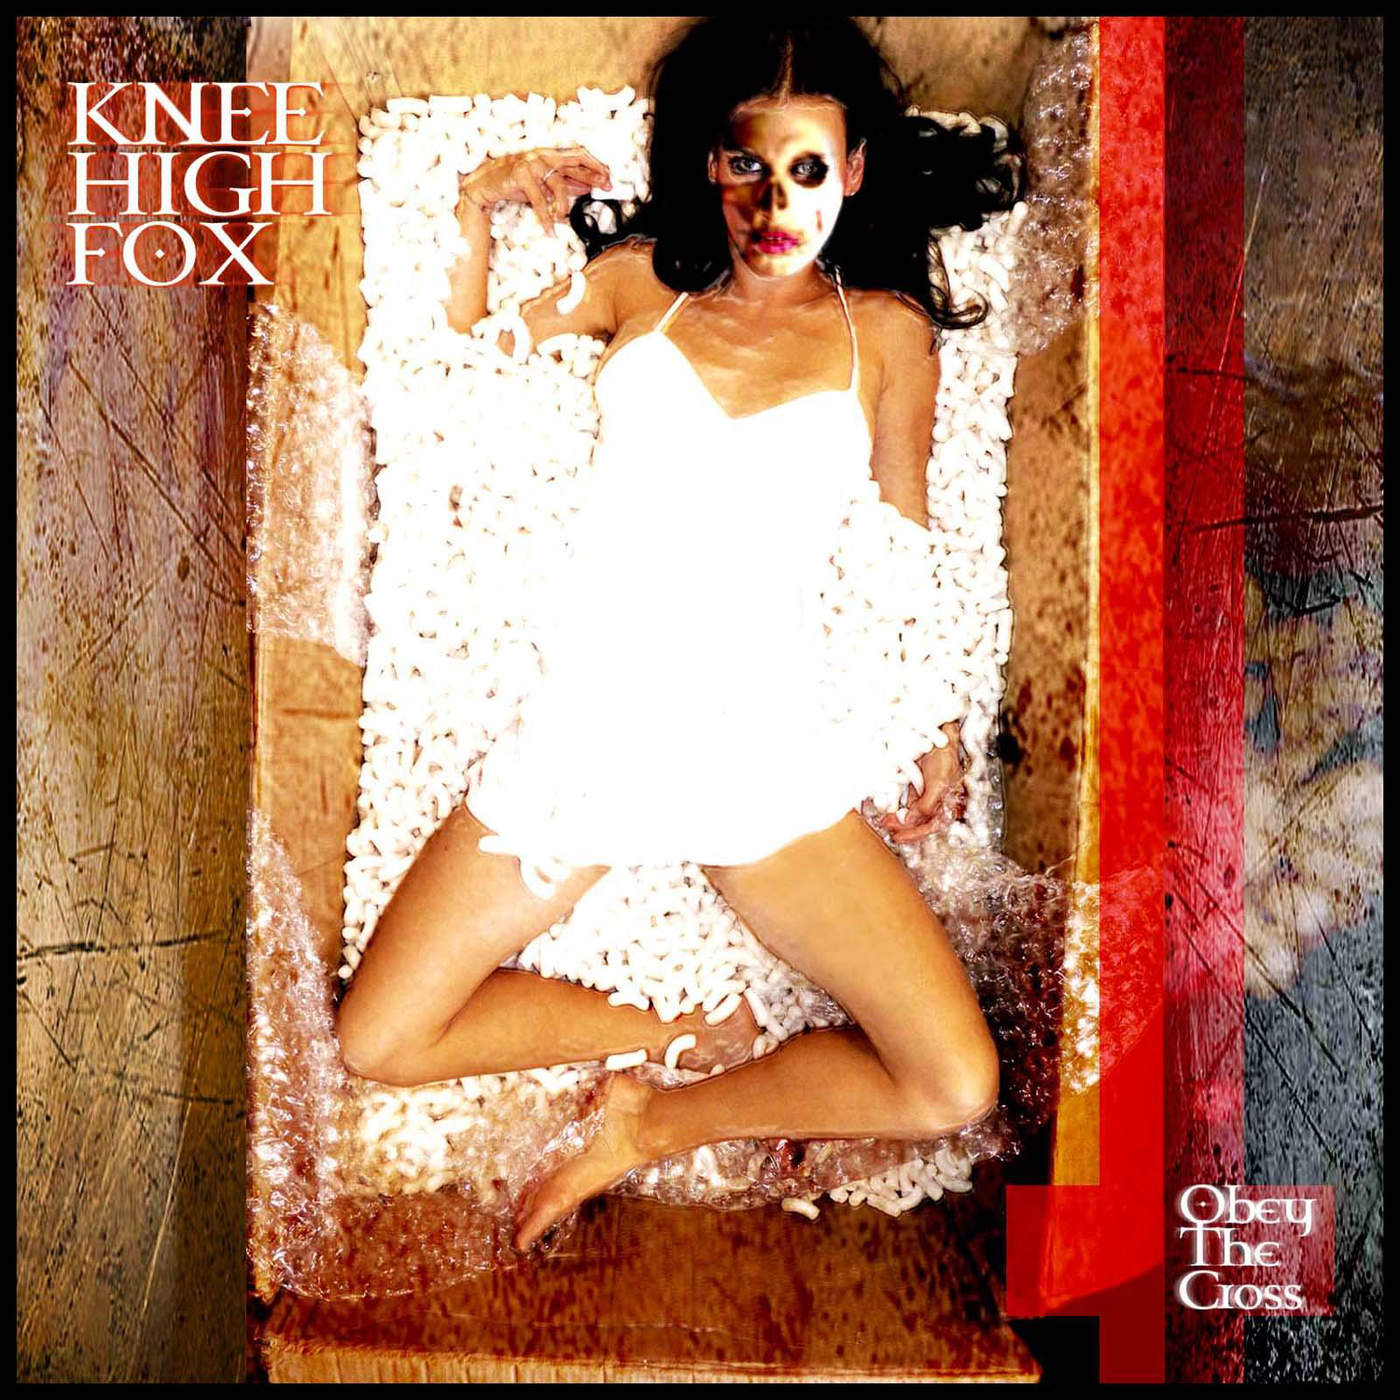 Knee High Fox - Obey the Cross (2015) Album Info